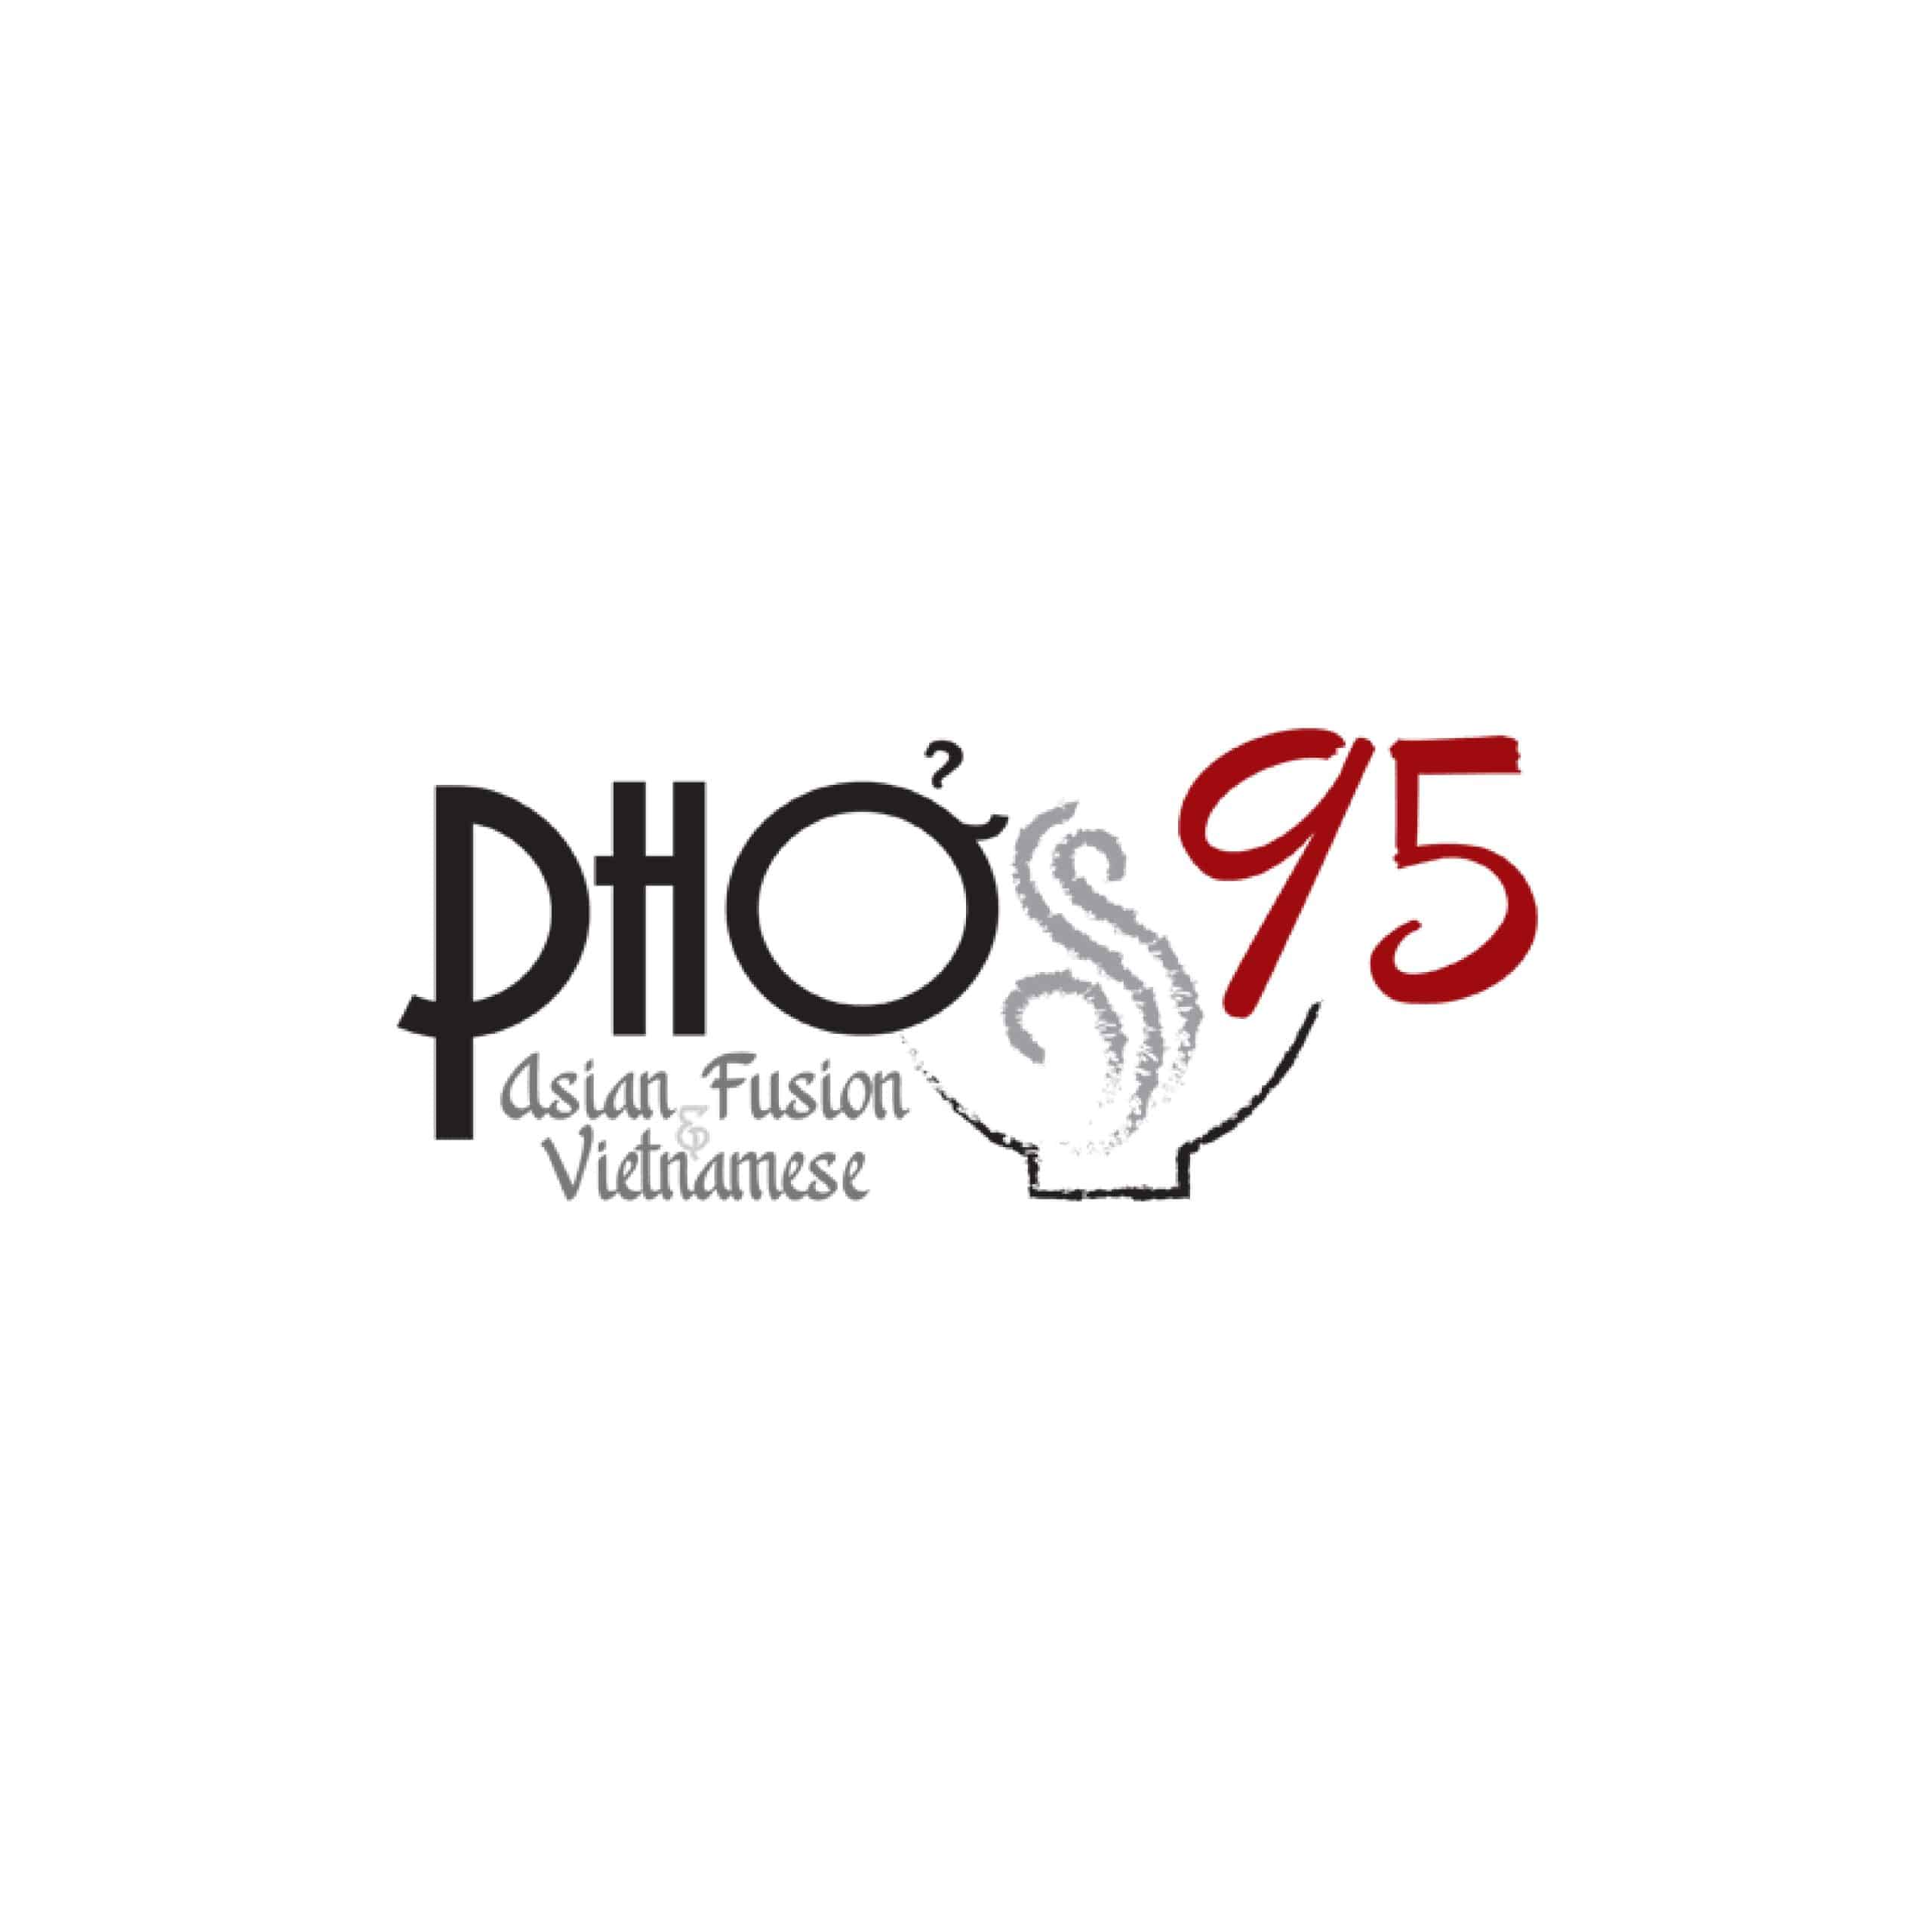 pho95 asian fusion logo